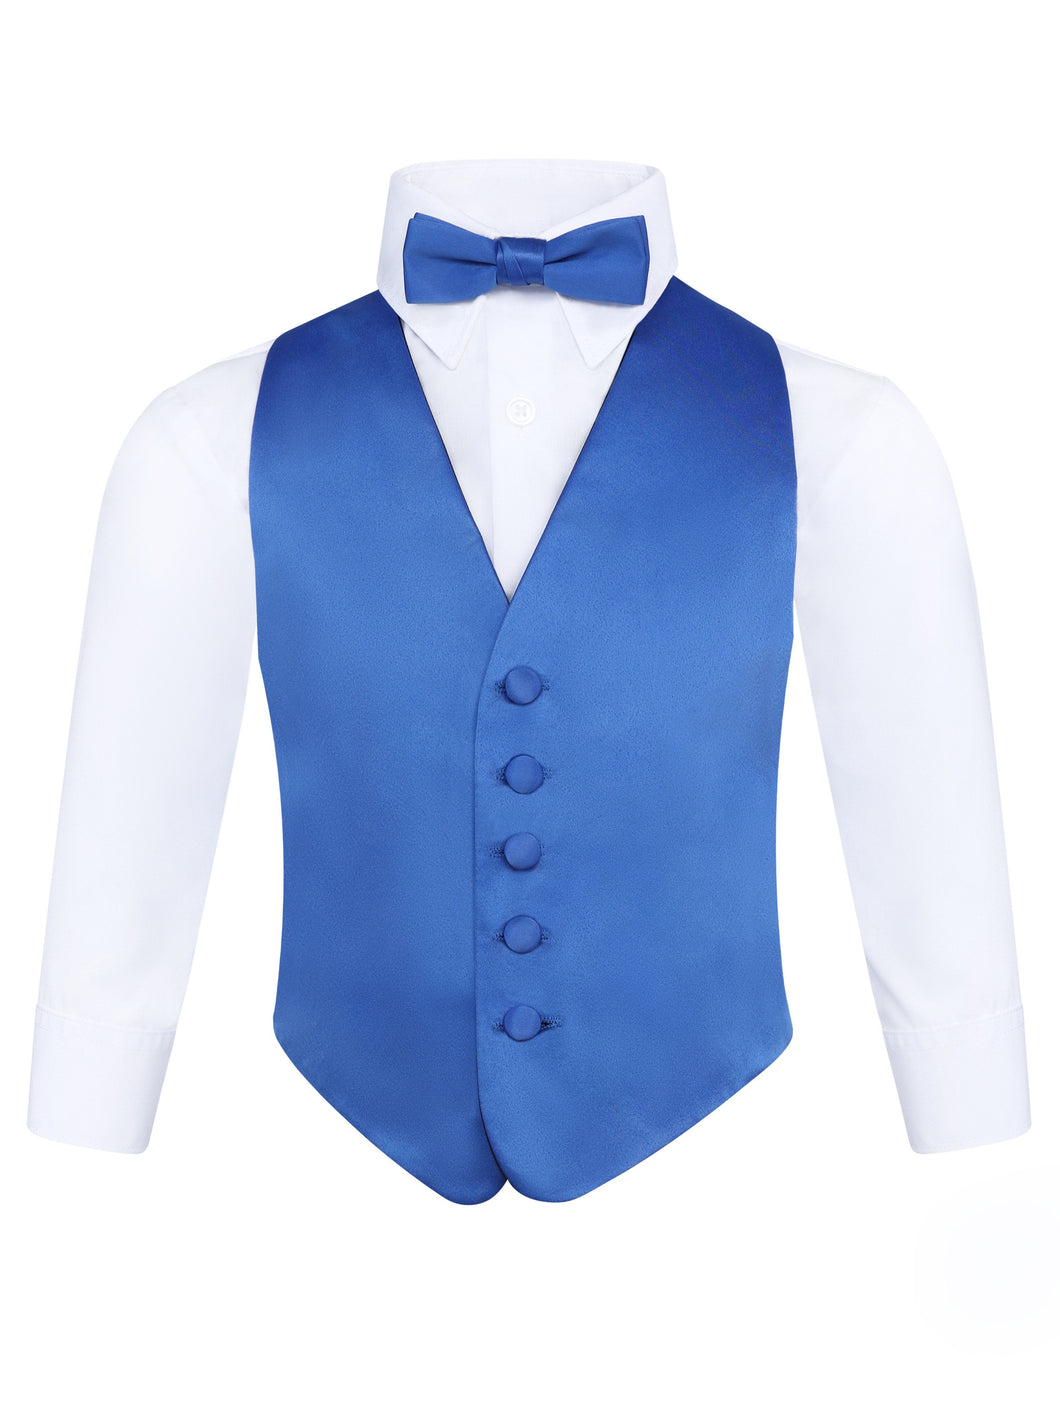 S.H. Churchill & Co. Boy's 3 Piece Royal Blue Backless Formal Vest Set - Includes Vest, Bow Tie, Pocket Square for Tuxedo or Suit